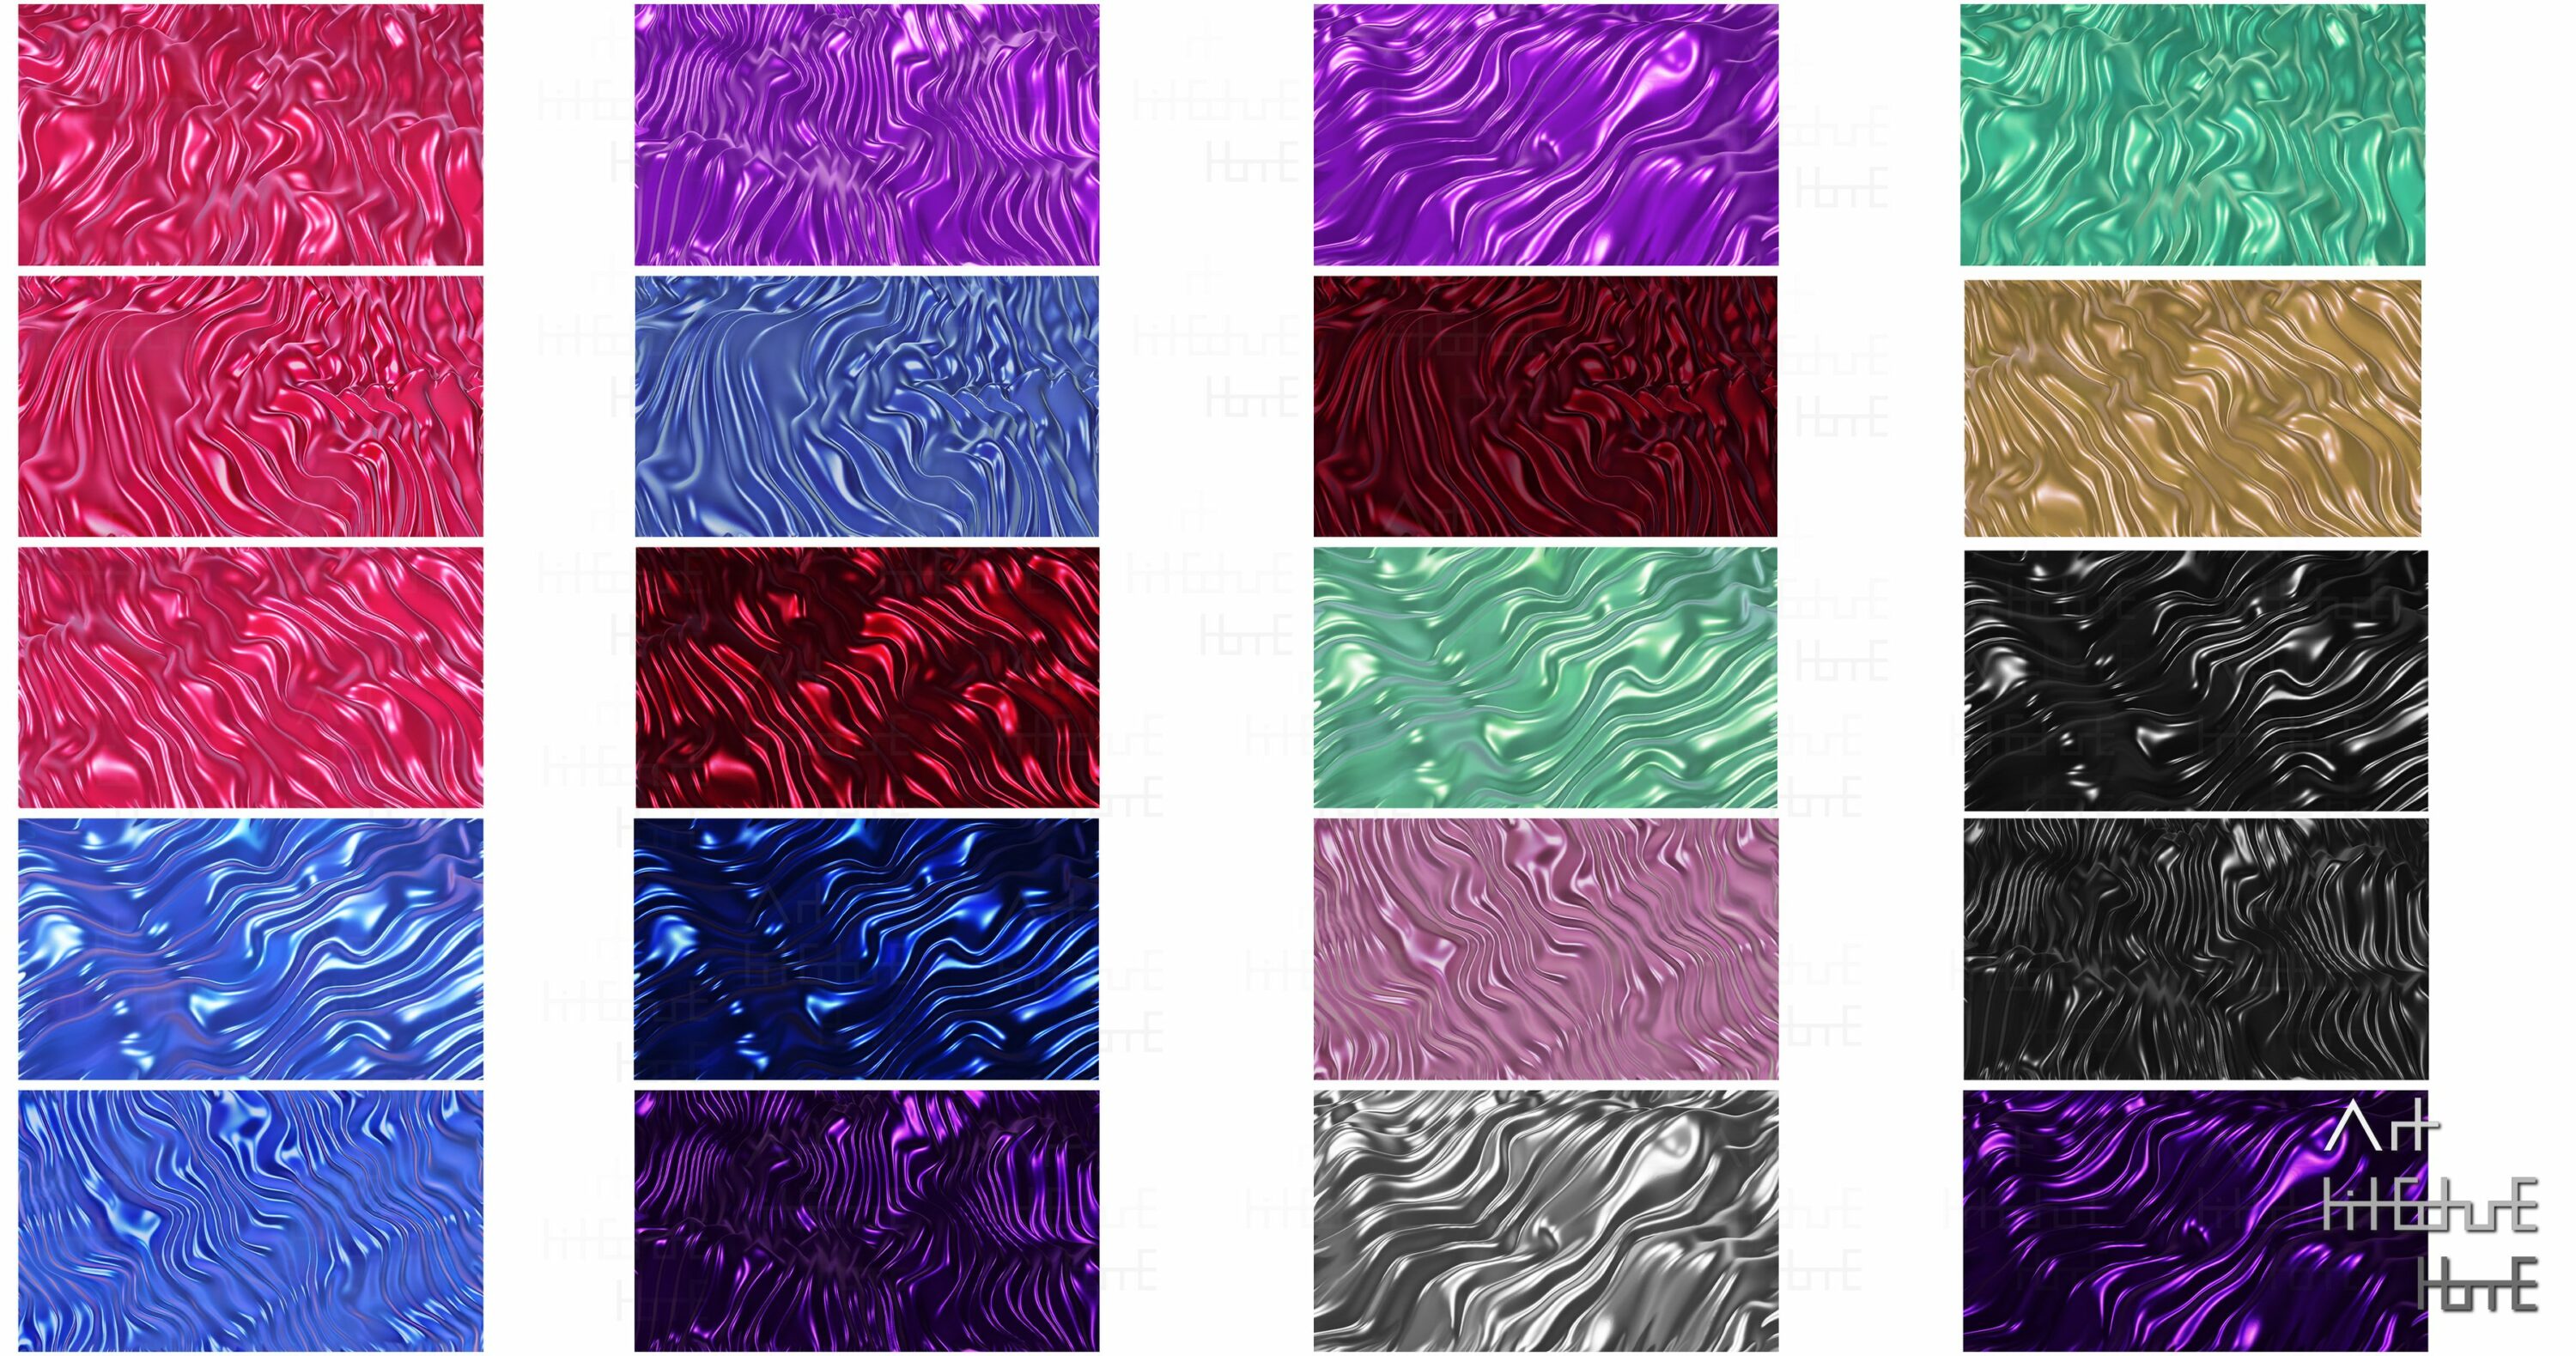 Huge variety of pattern colors.